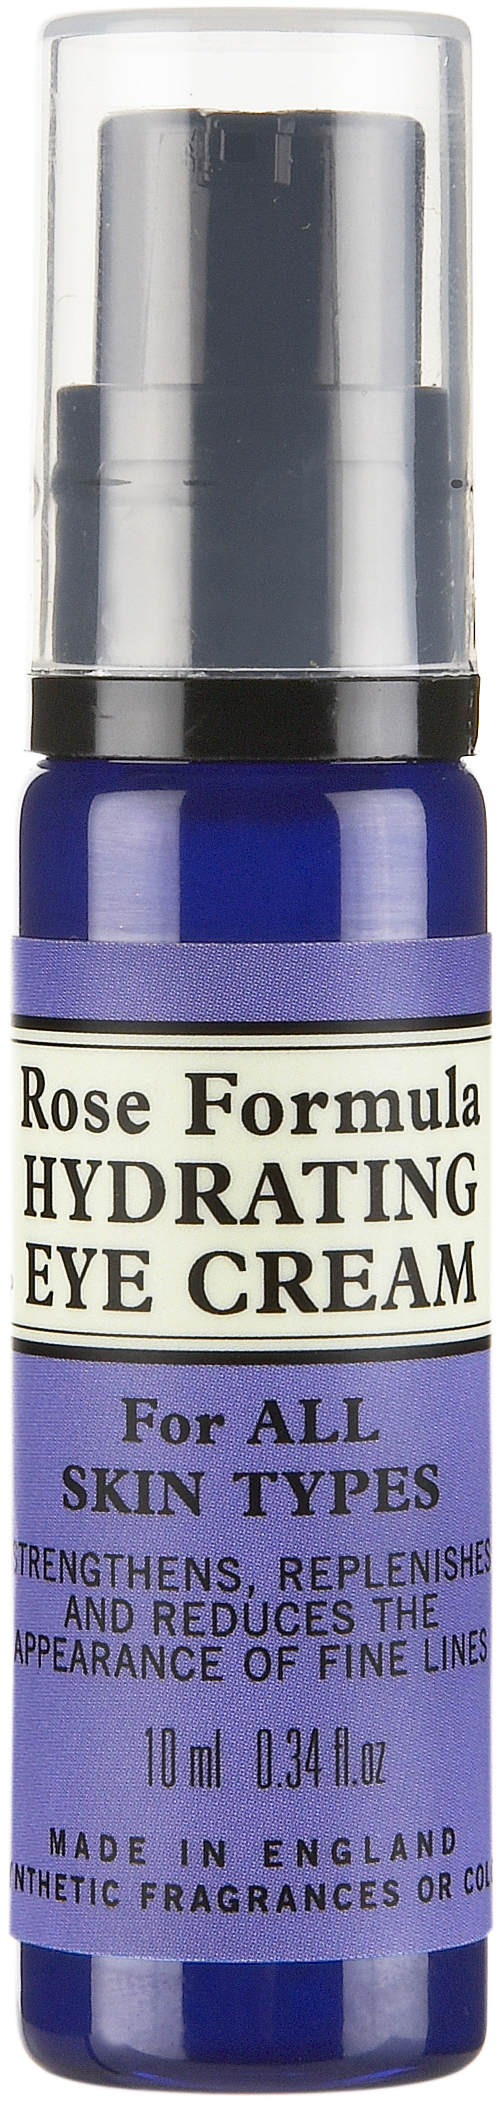 Neal’s Yard Remedies Rose Formula Hydrating Eye Cream 10ml